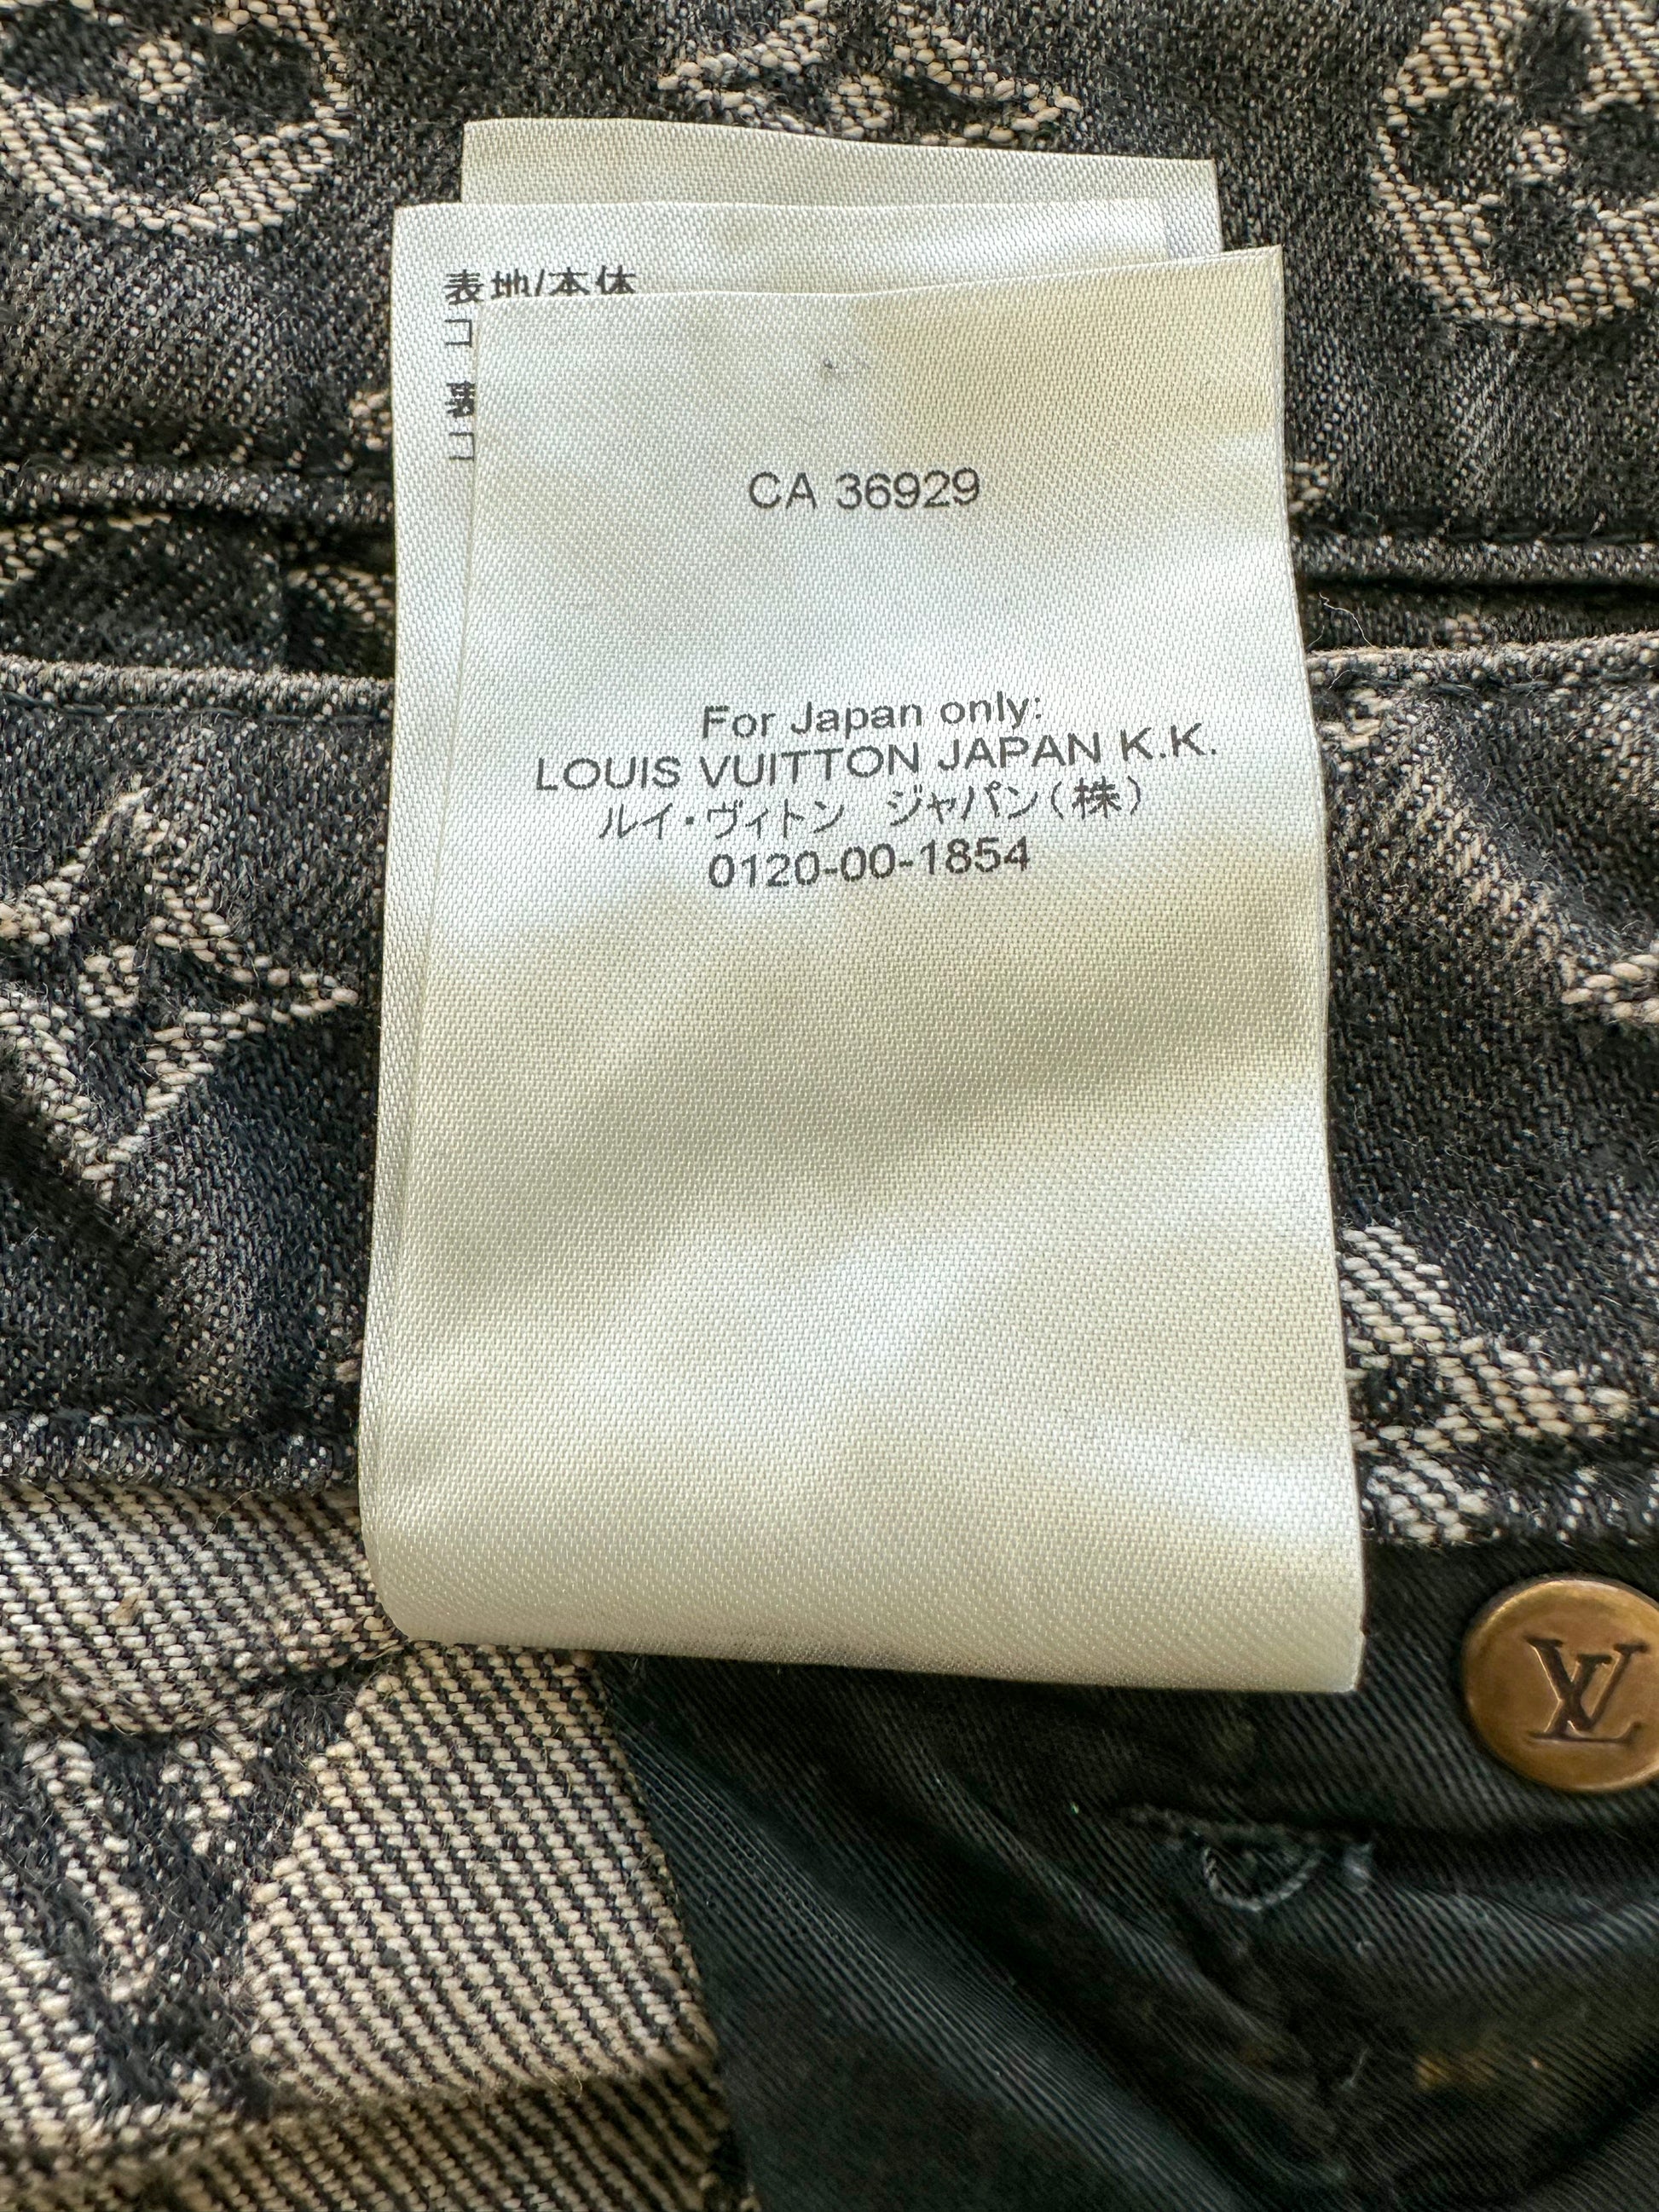 Dark Gray Louis Vuitton Fabric look like denim / jeans